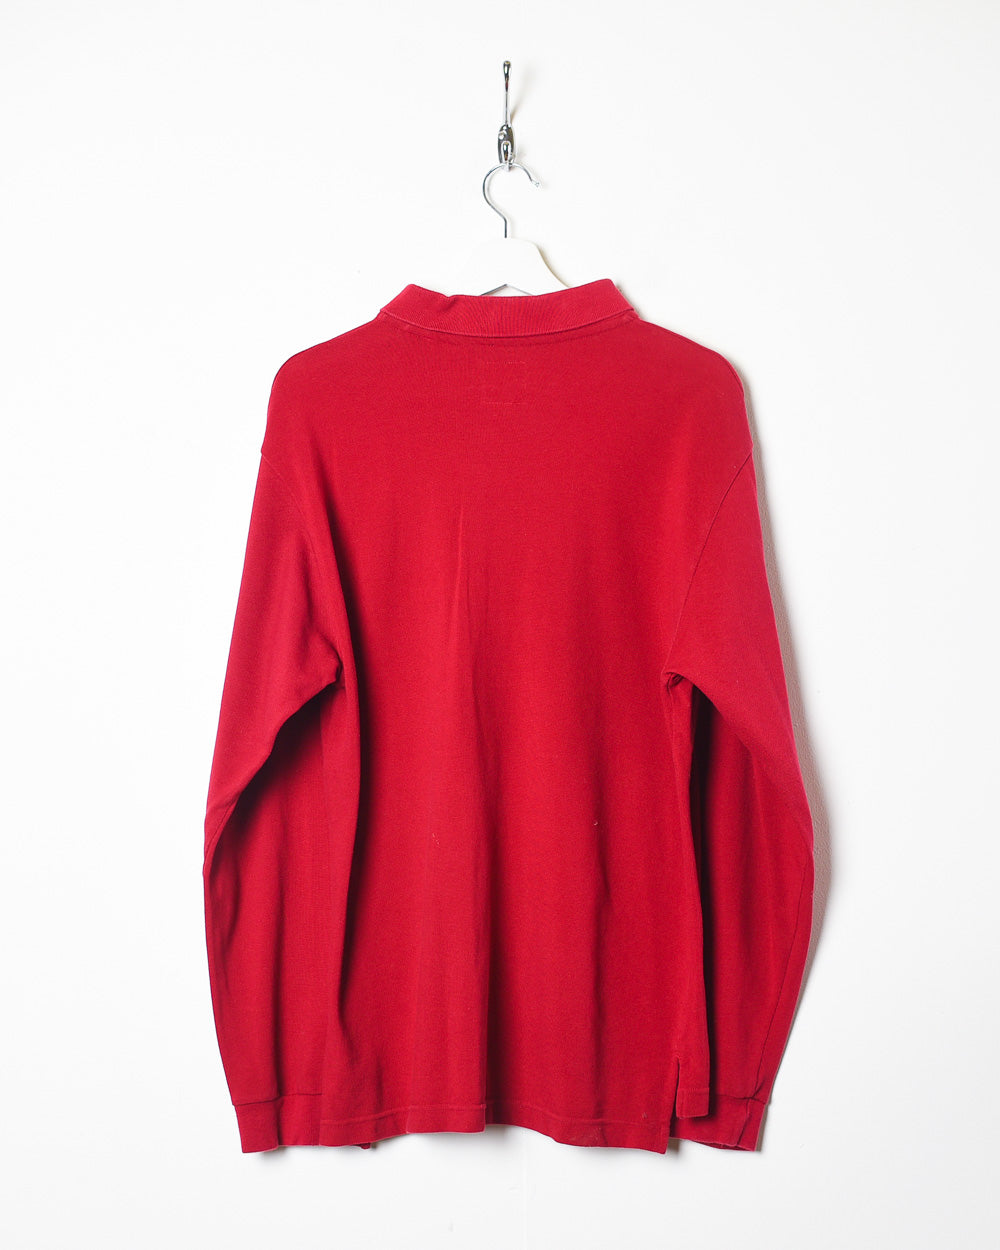 Red Nike 80s Long Sleeved Polo Shirt - Medium